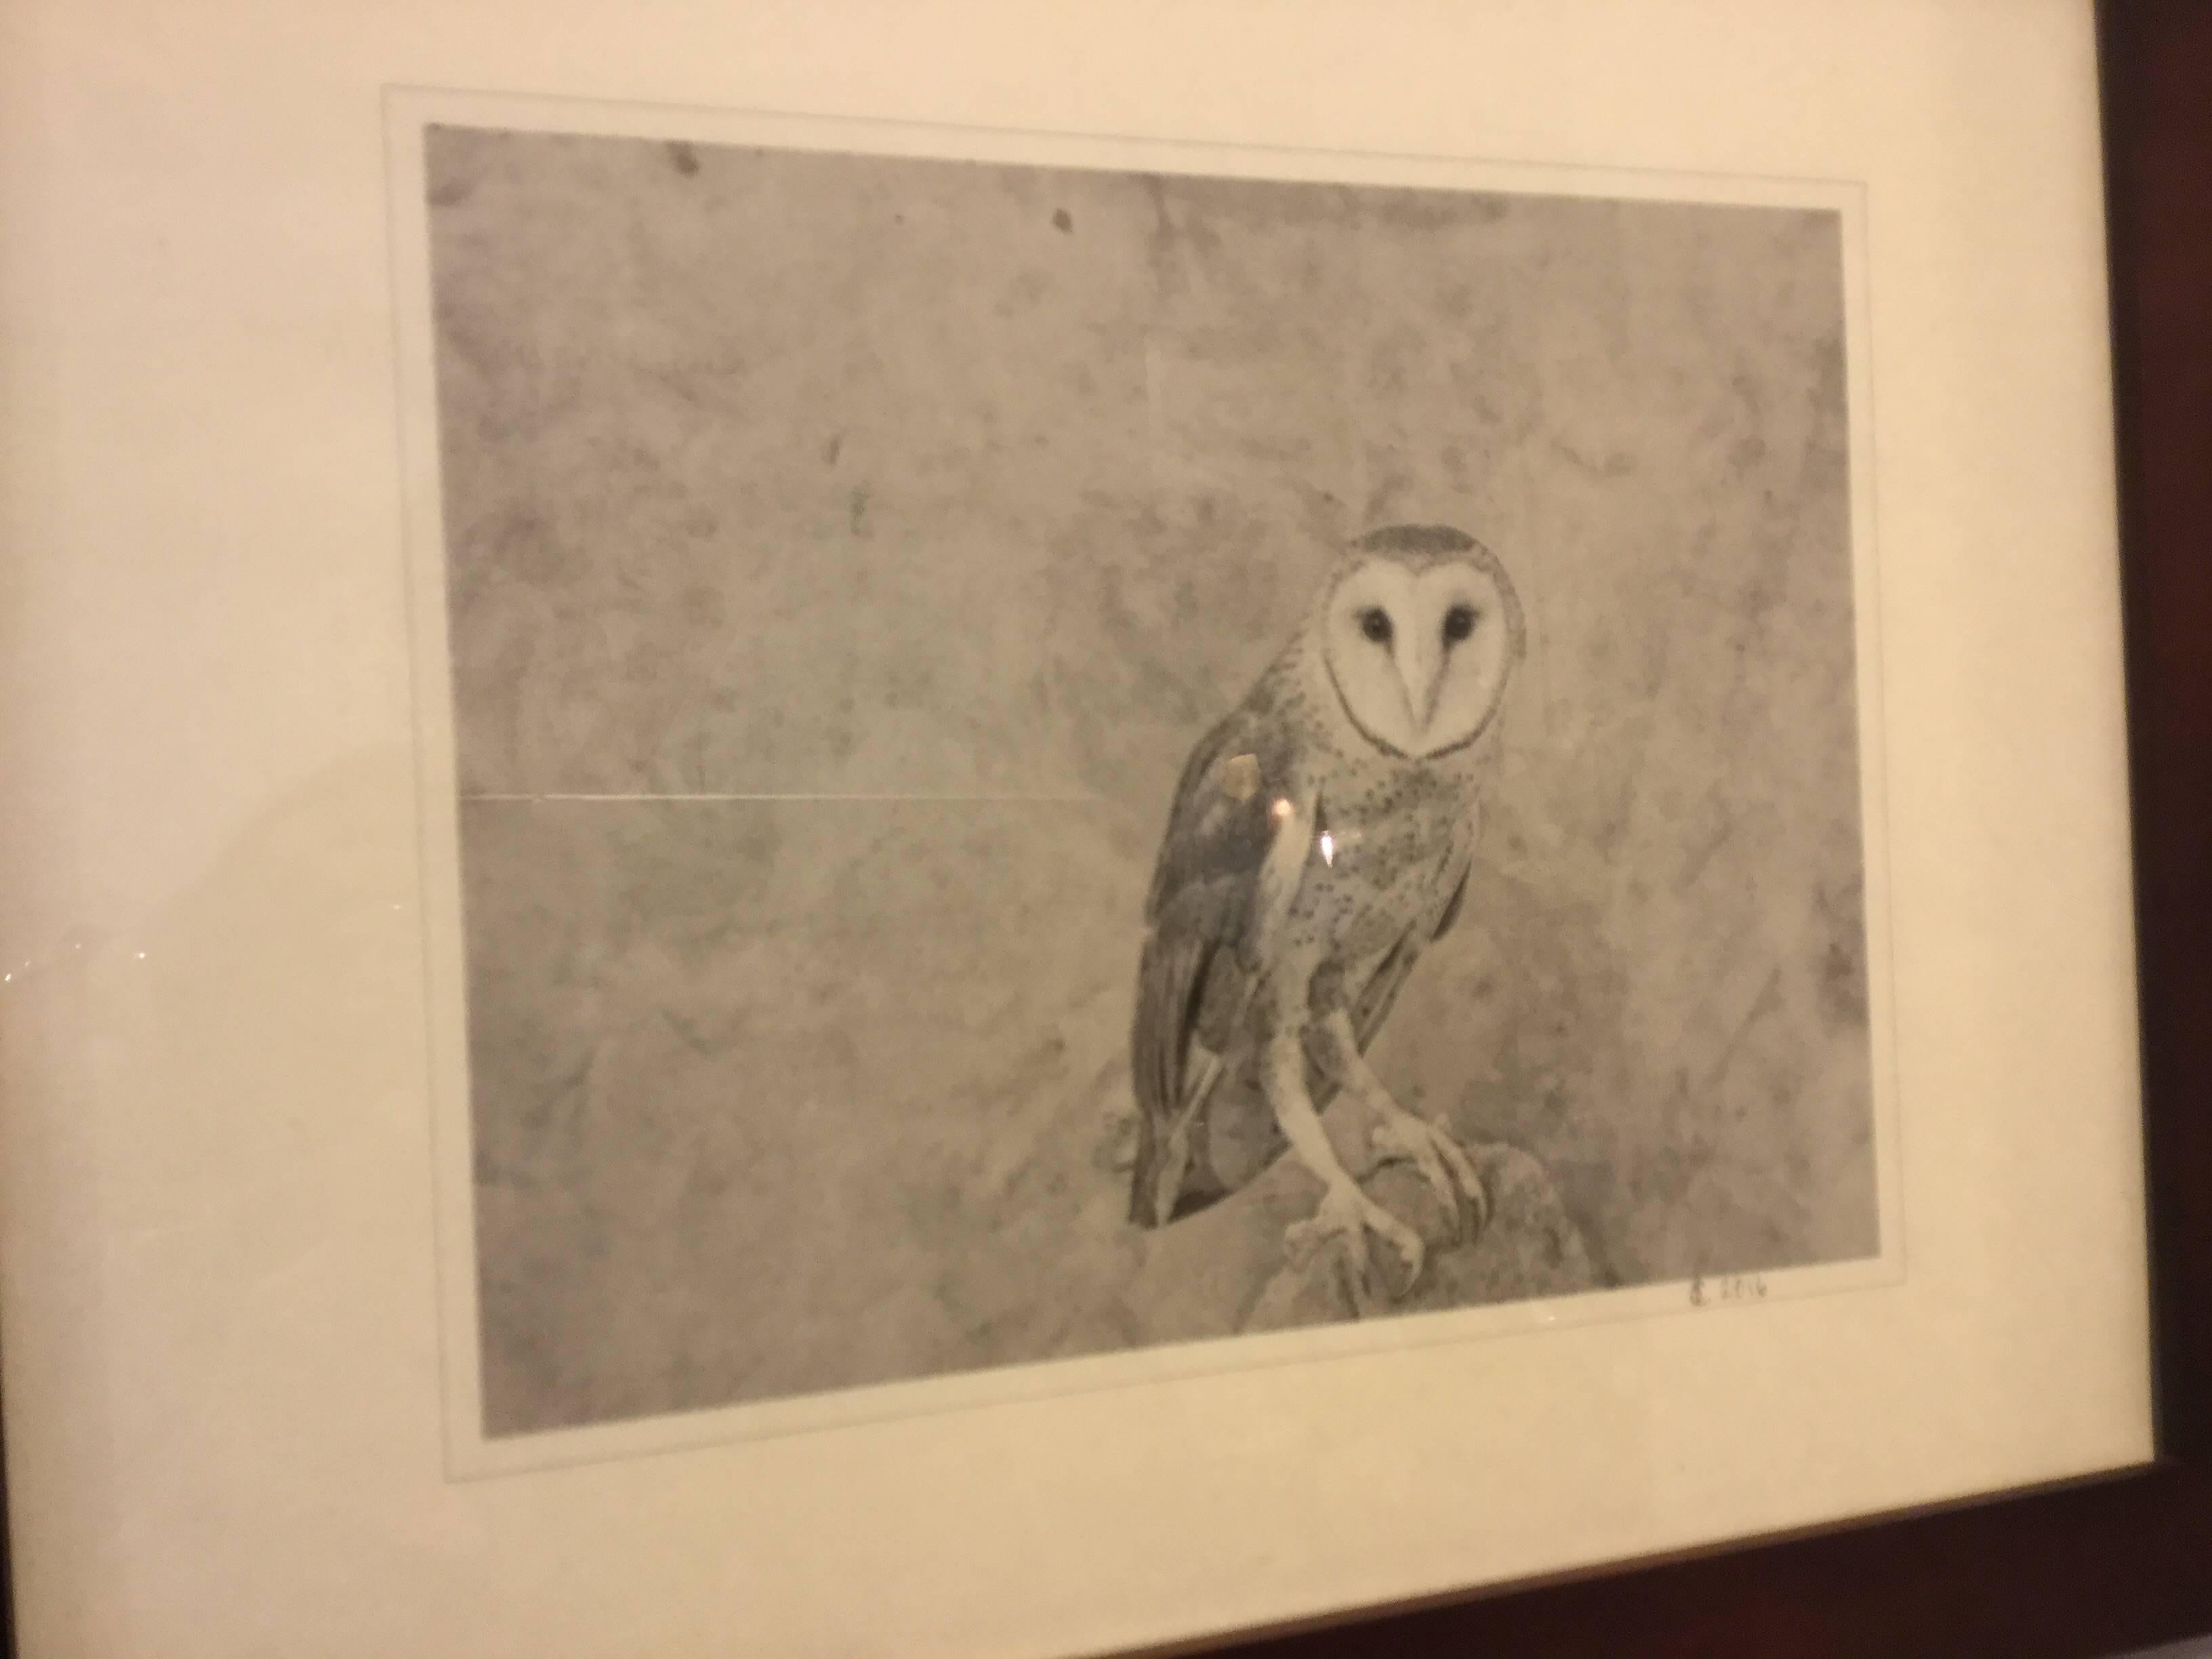 American Framed Photograph / Print of an Owl